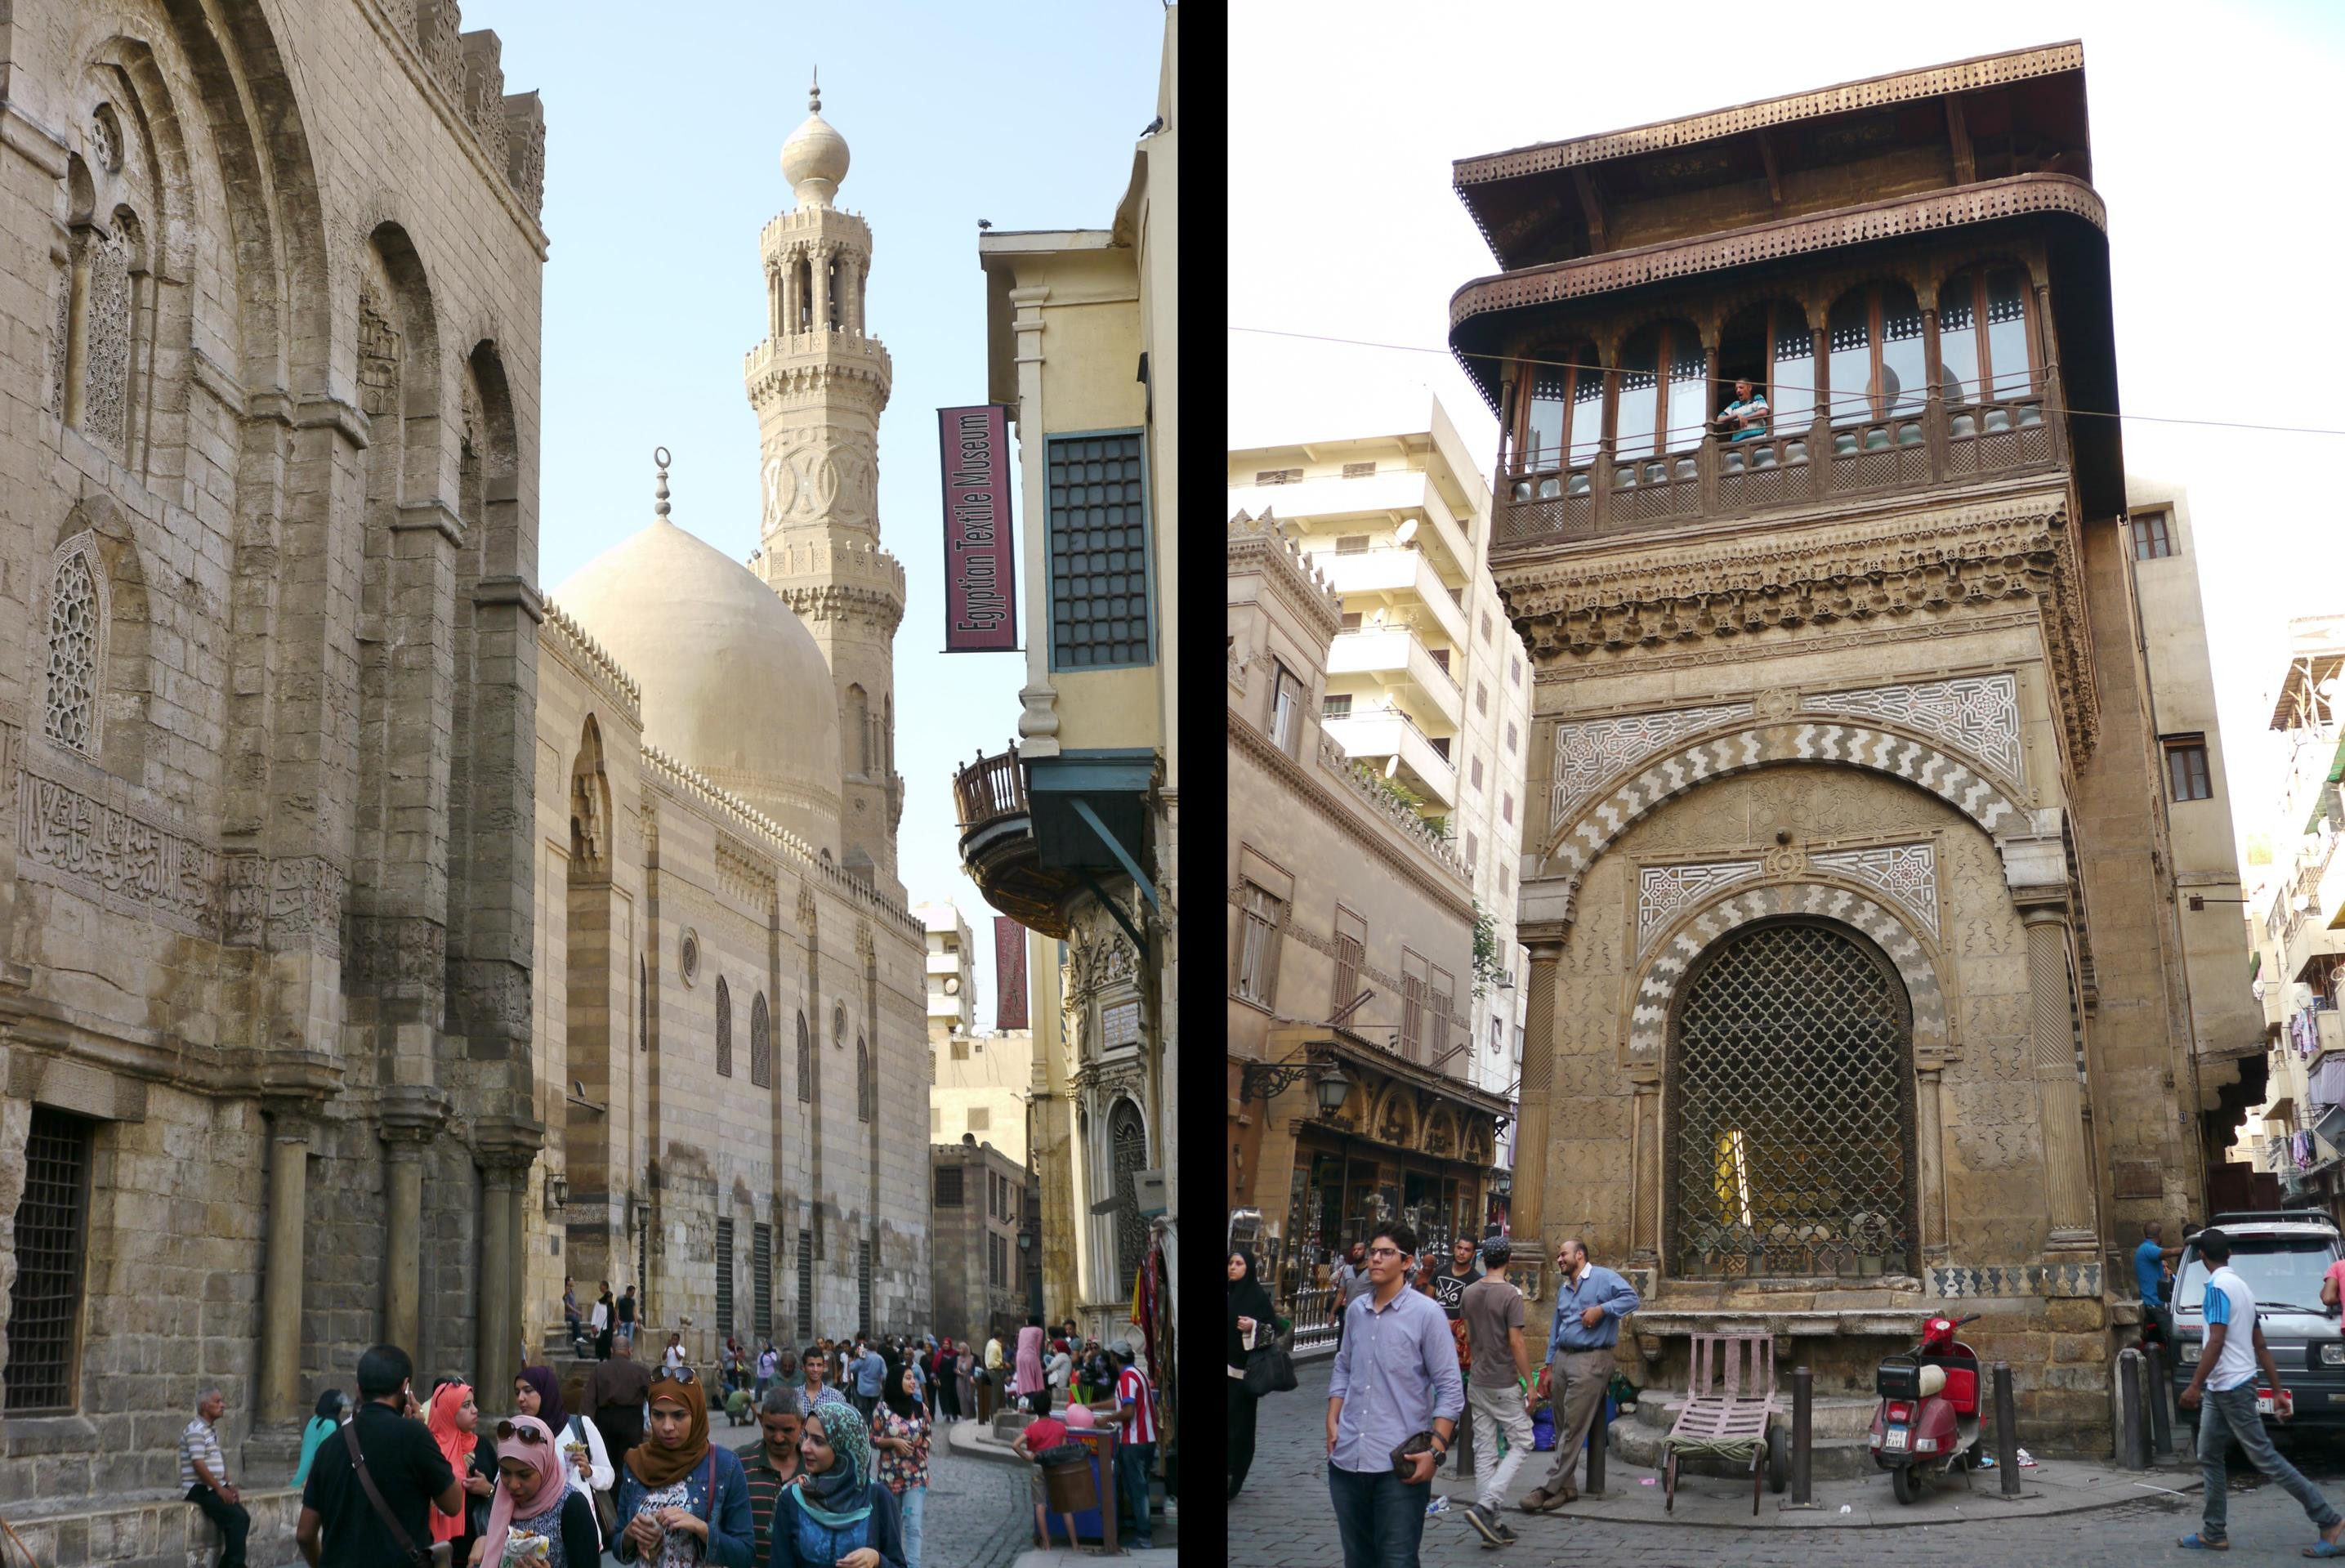 Beautiful Islamic architecture at Bein al Qasreen in Islamic Cairo